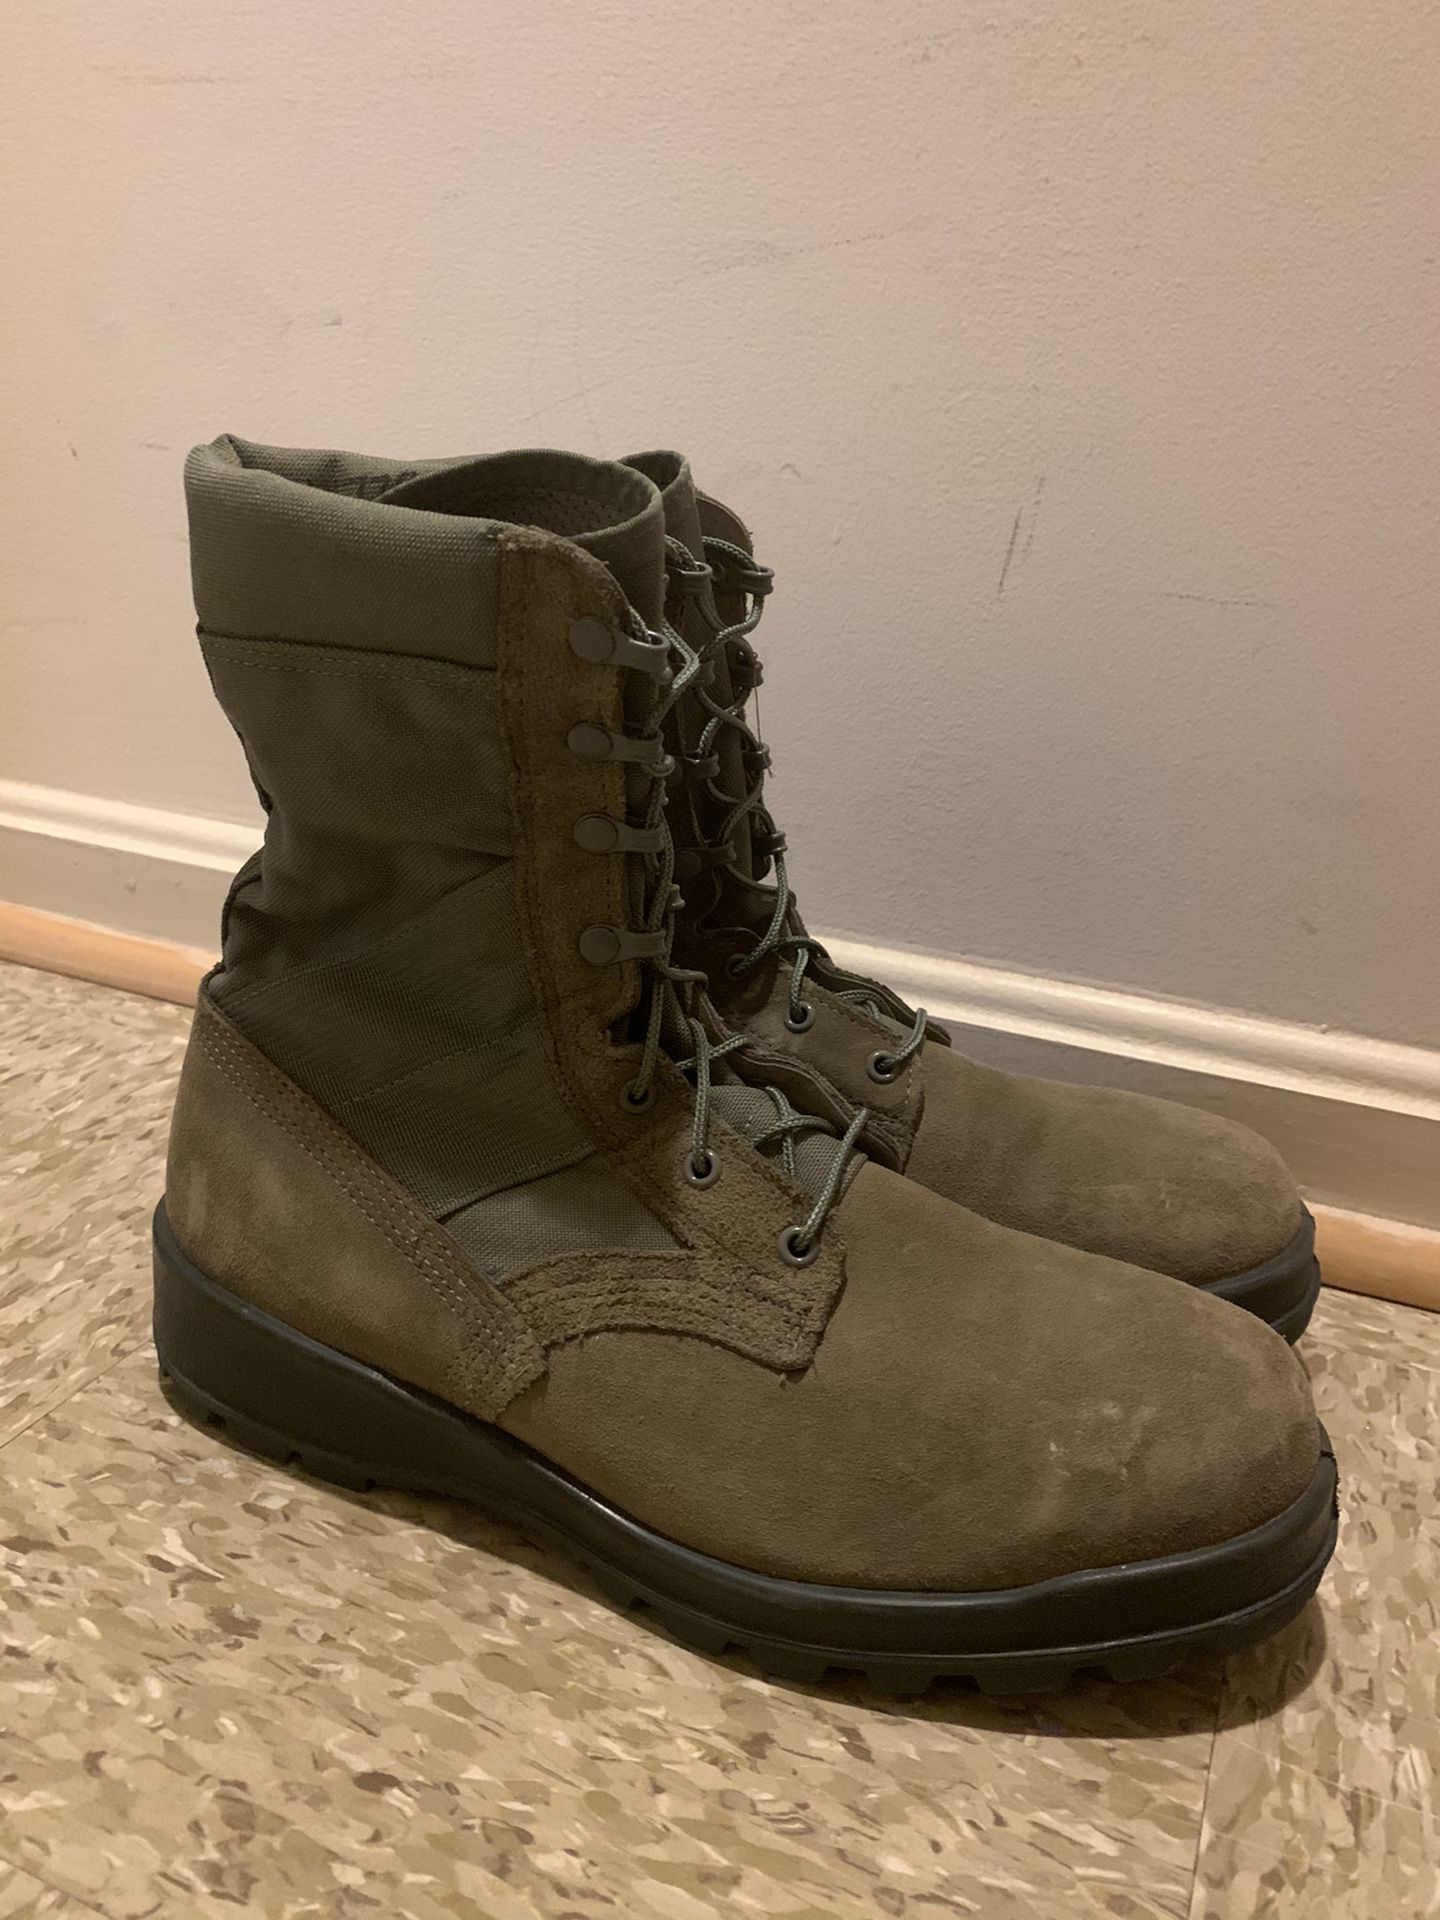 Belleville Steel Toe Boots *Military Grade*